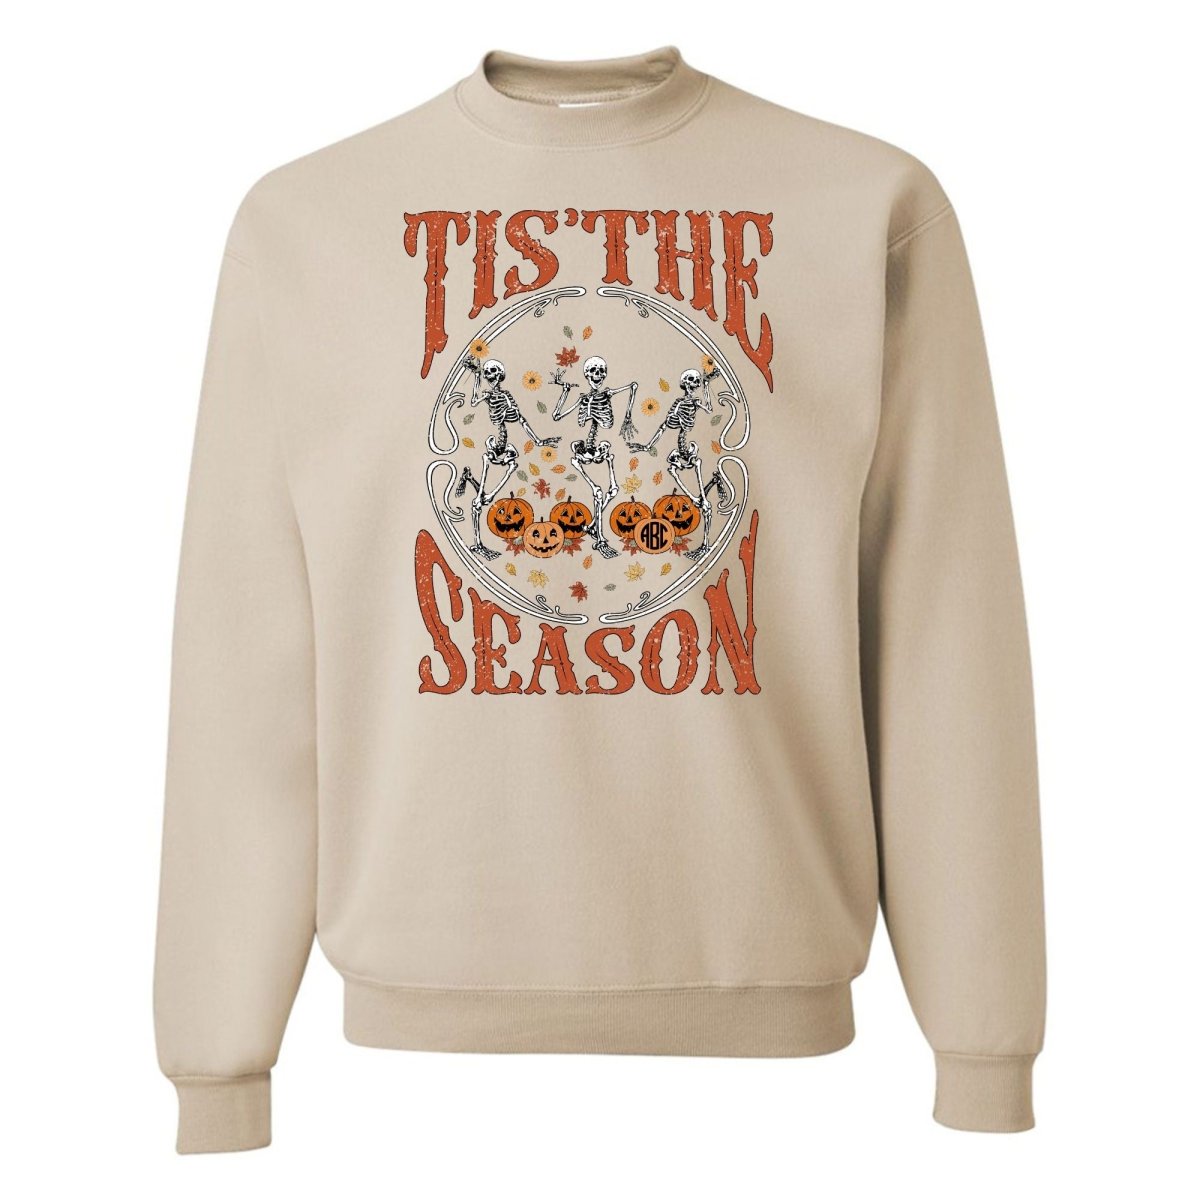 Monogrammed 'Tis The Season Skeletons' Crewneck Sweatshirt - United Monograms